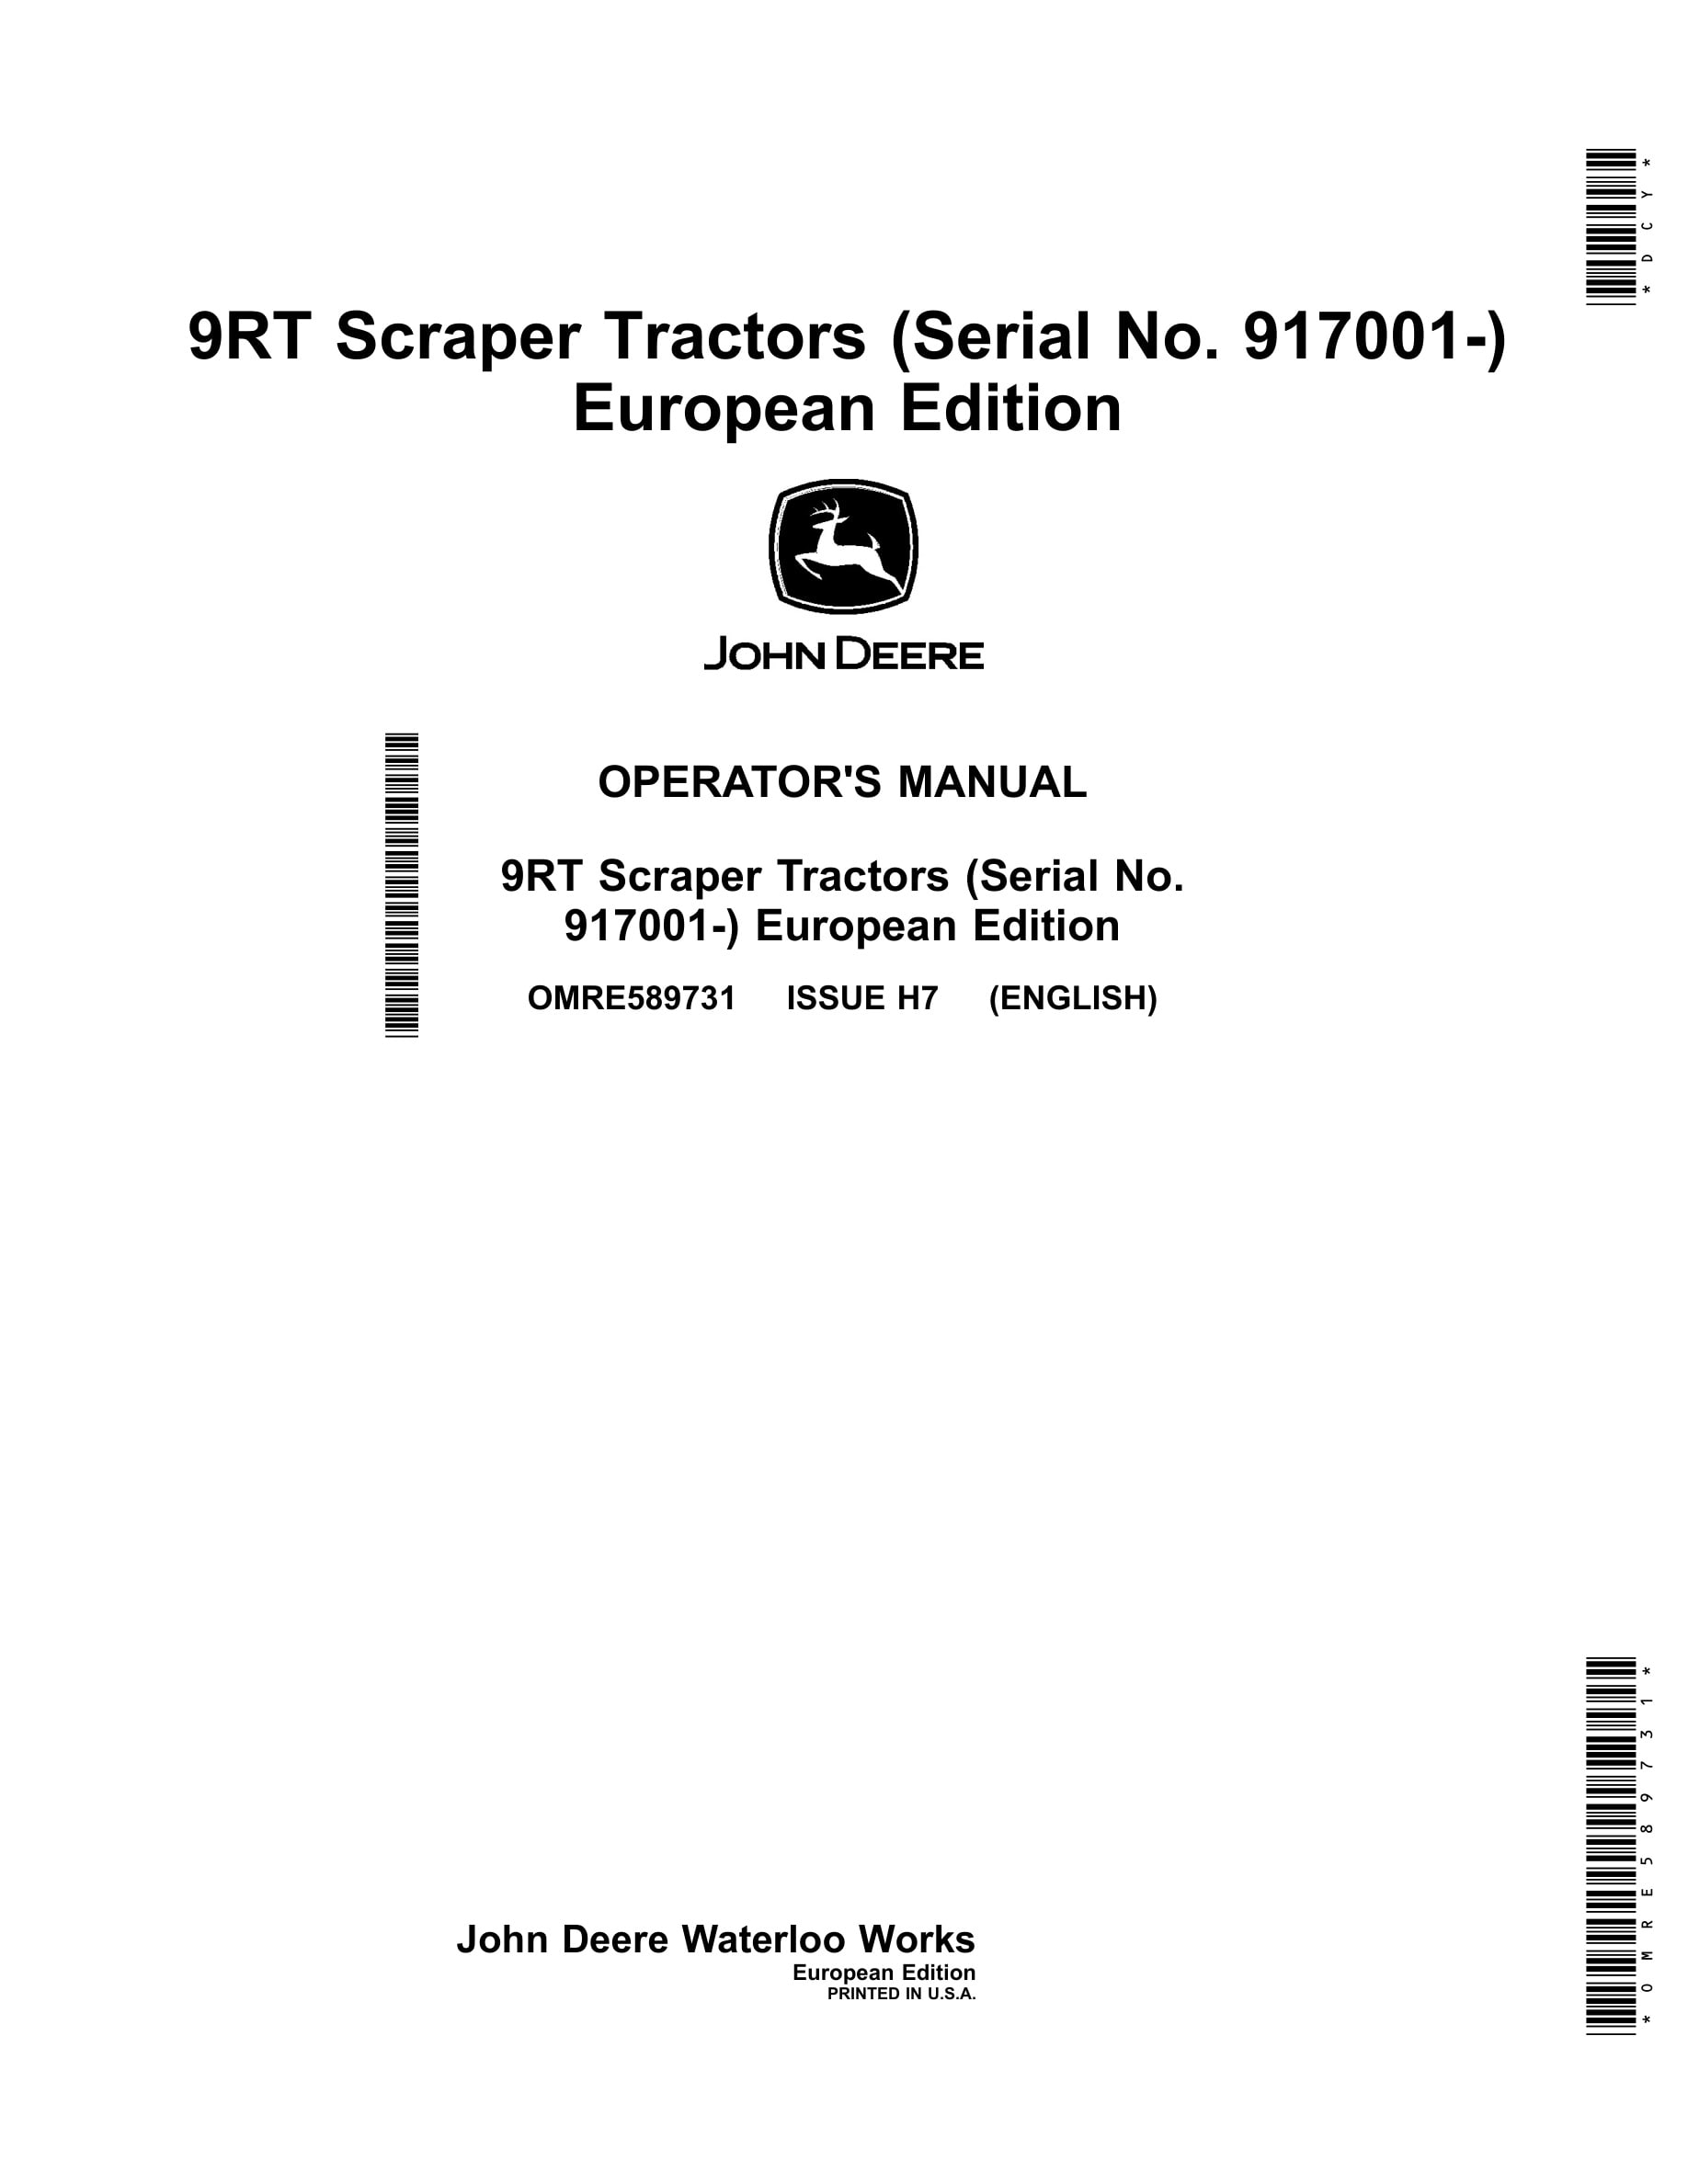 John Deere 9rt Scraper Tractors Operator Manuals OMRE589731-1